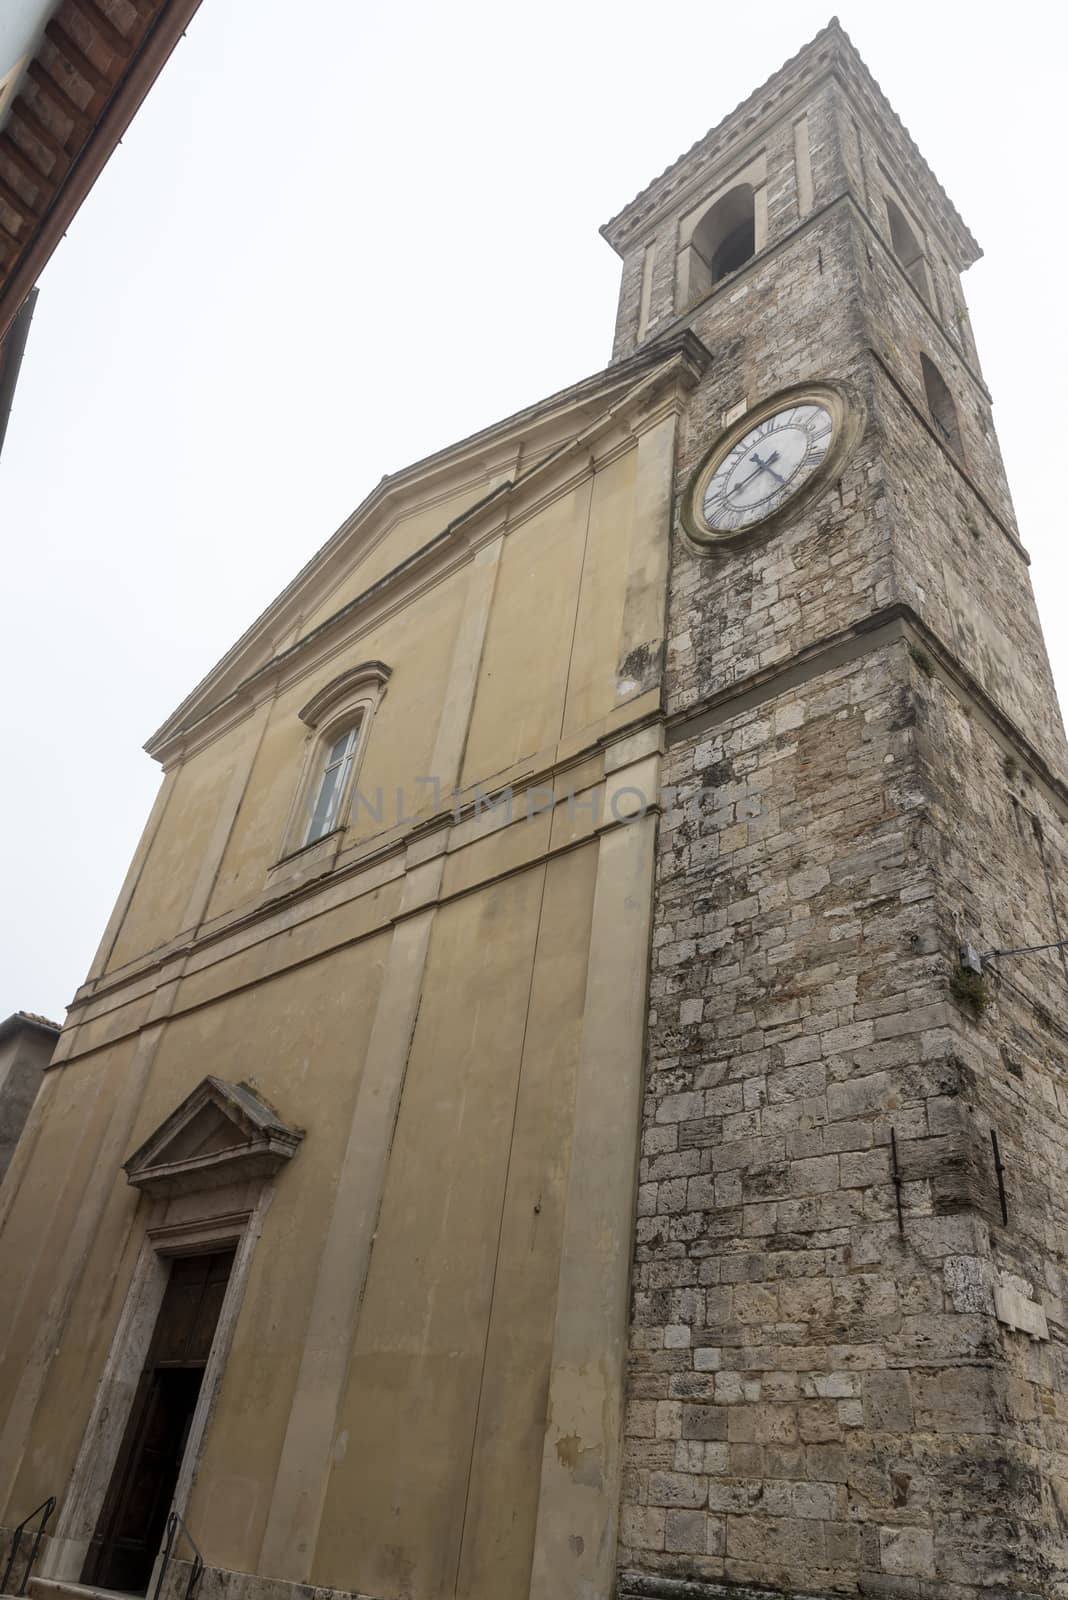 acquasparta,italy september 21 2020:Cathedral of Santa Cecilia in the town of Acquasparta